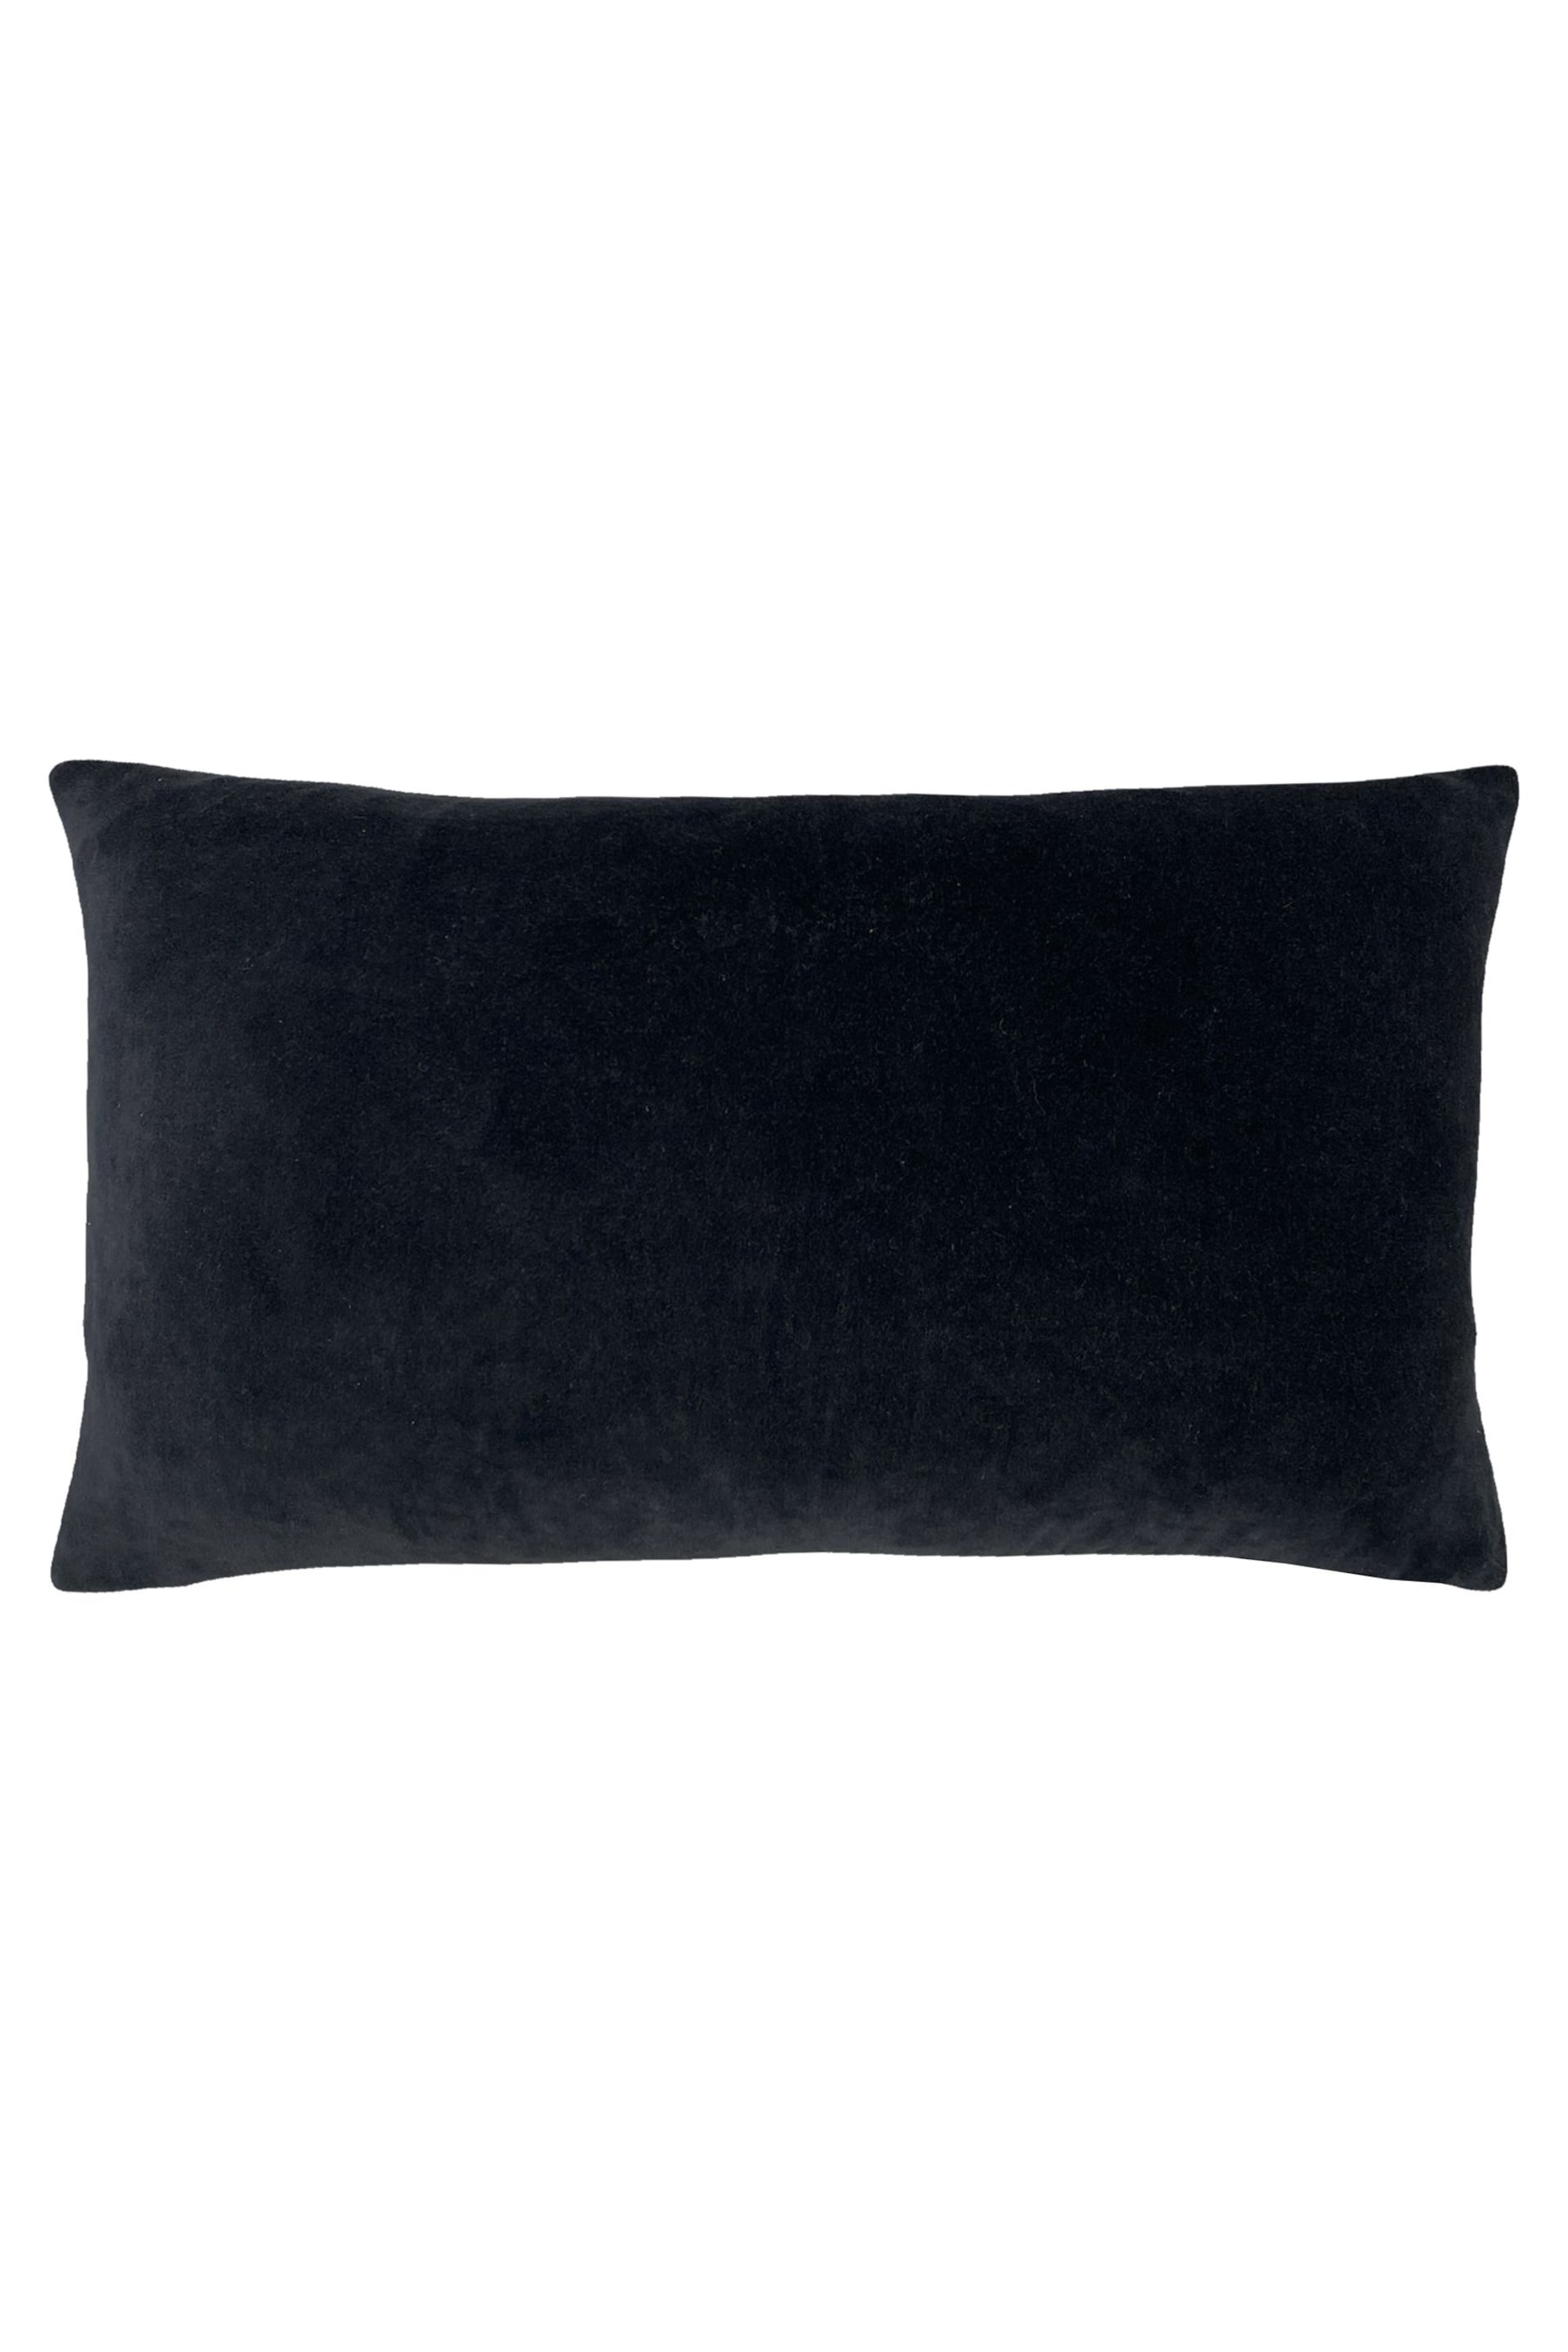 furn. Black Mangata Cushion - Image 2 of 4